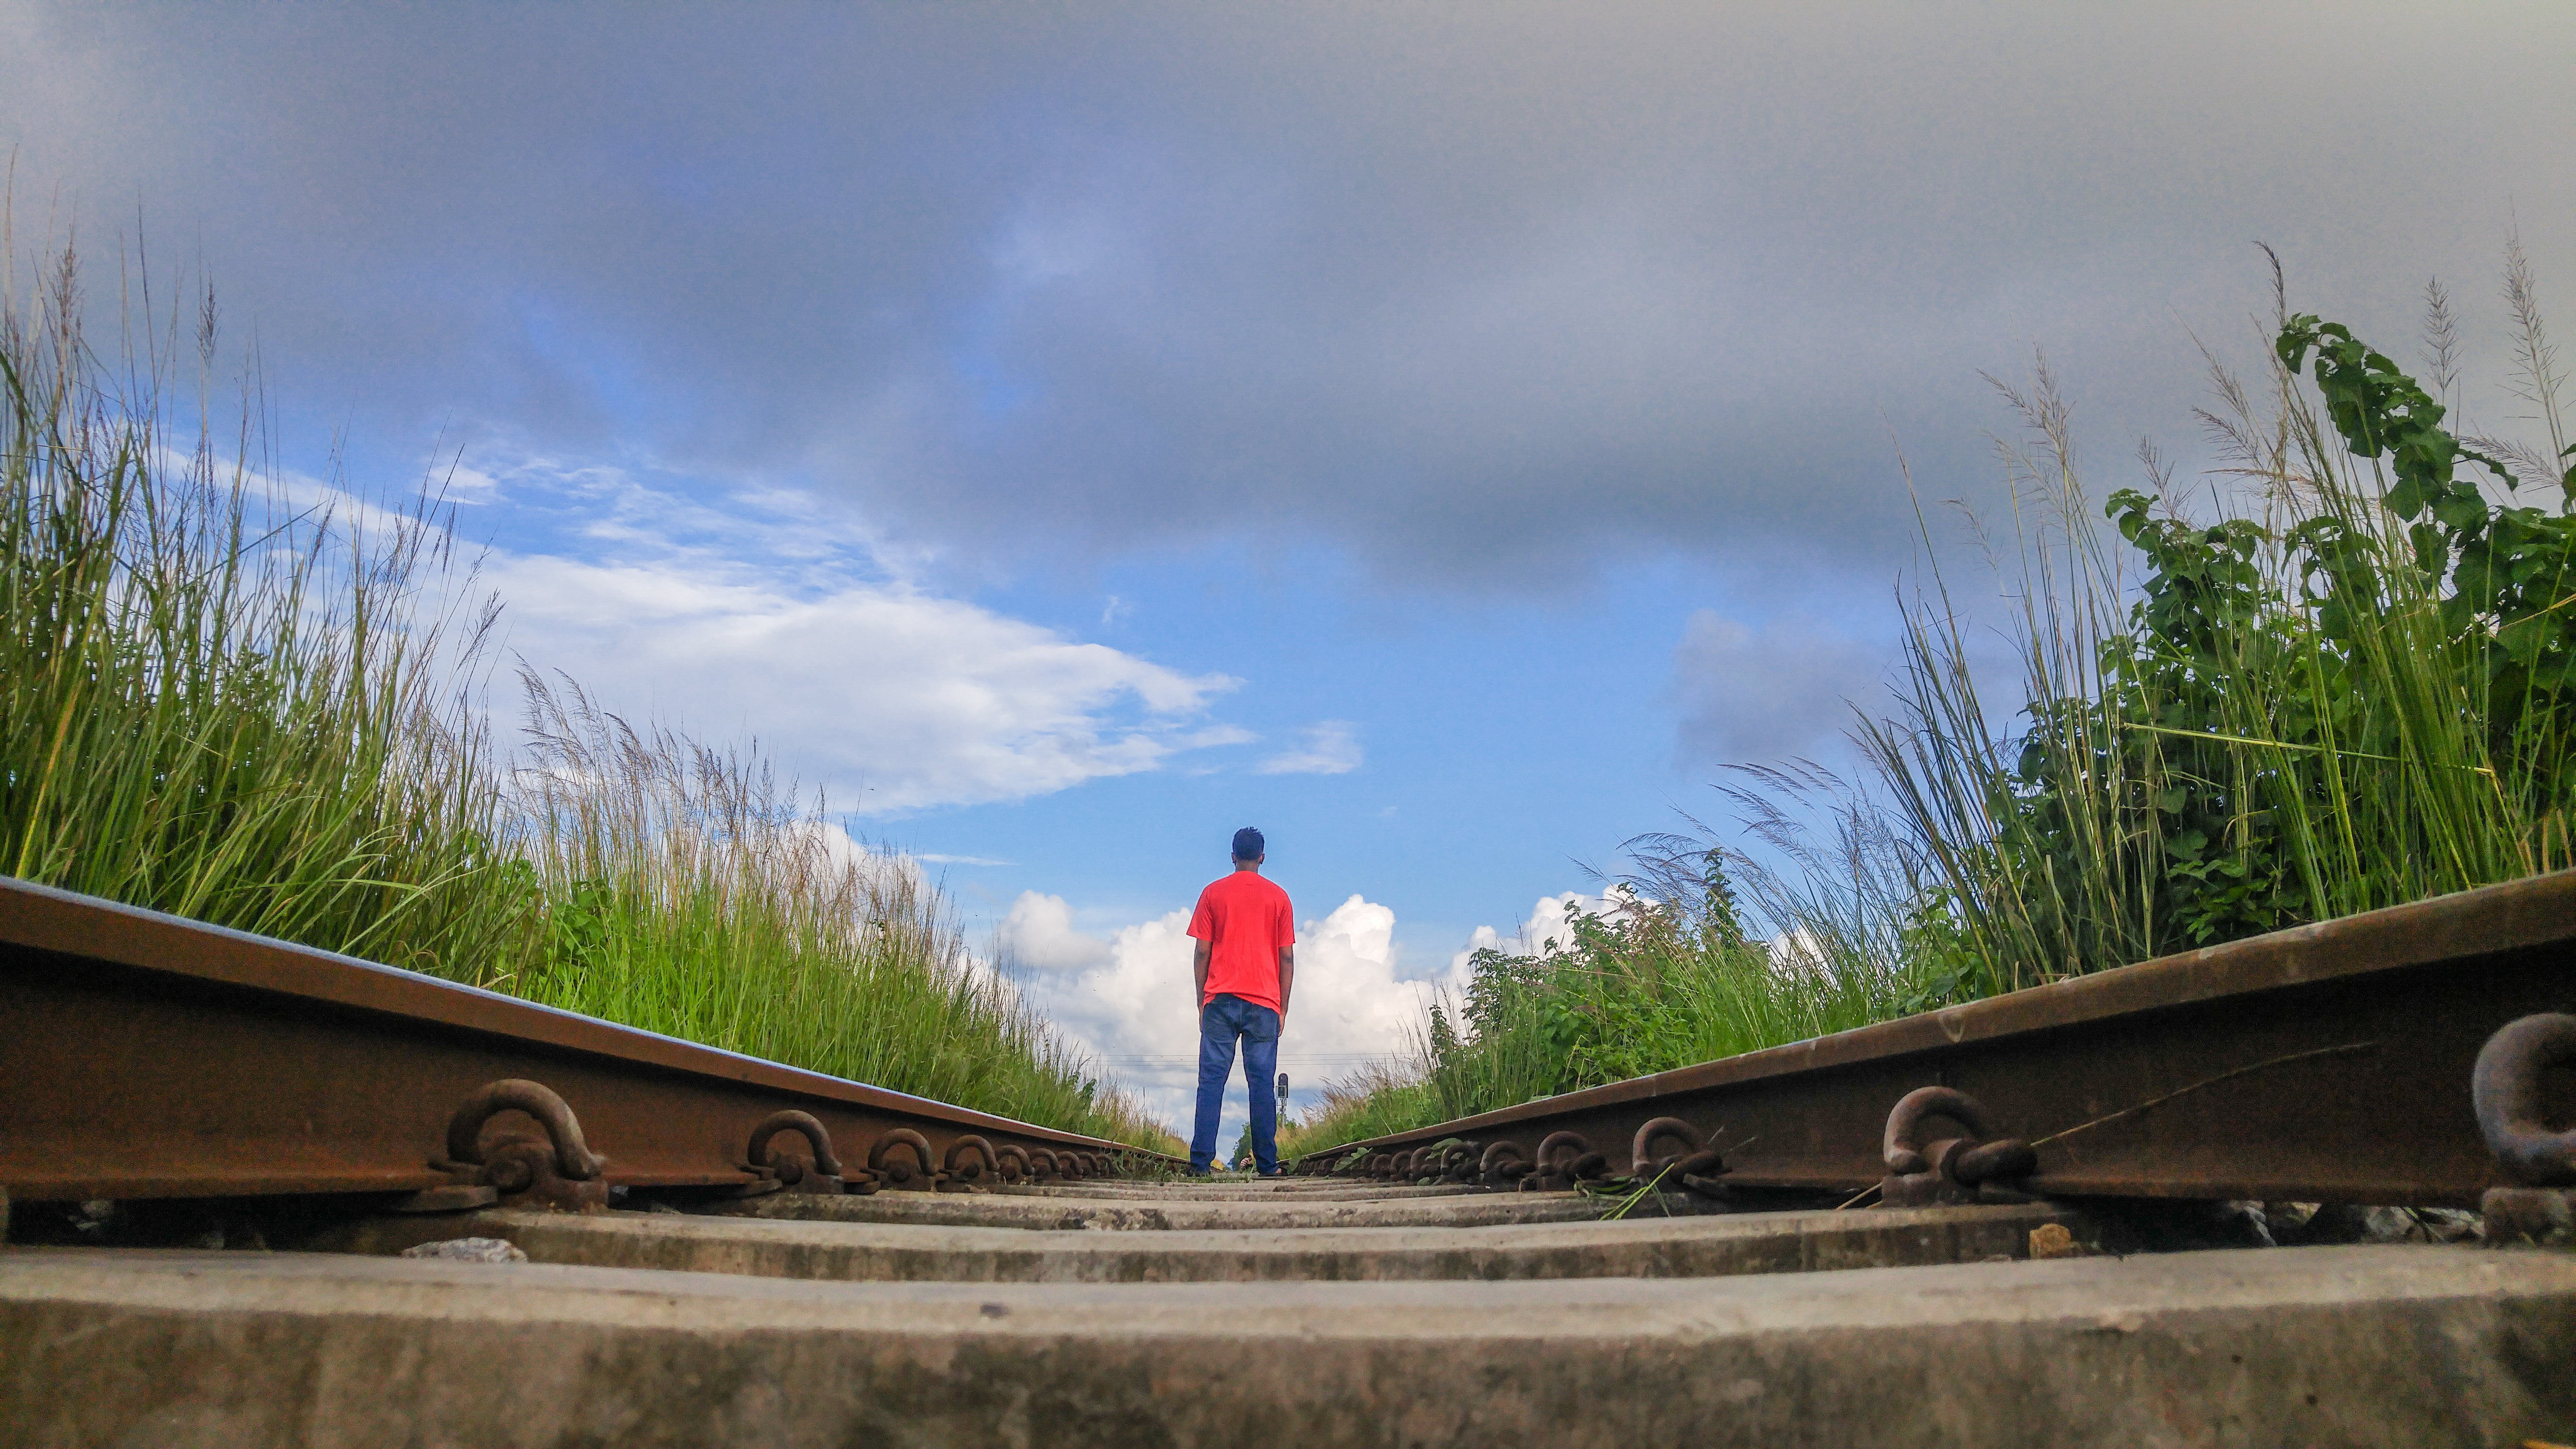 railway, Bangladesh, one person, rear view, sky, cloud - sky